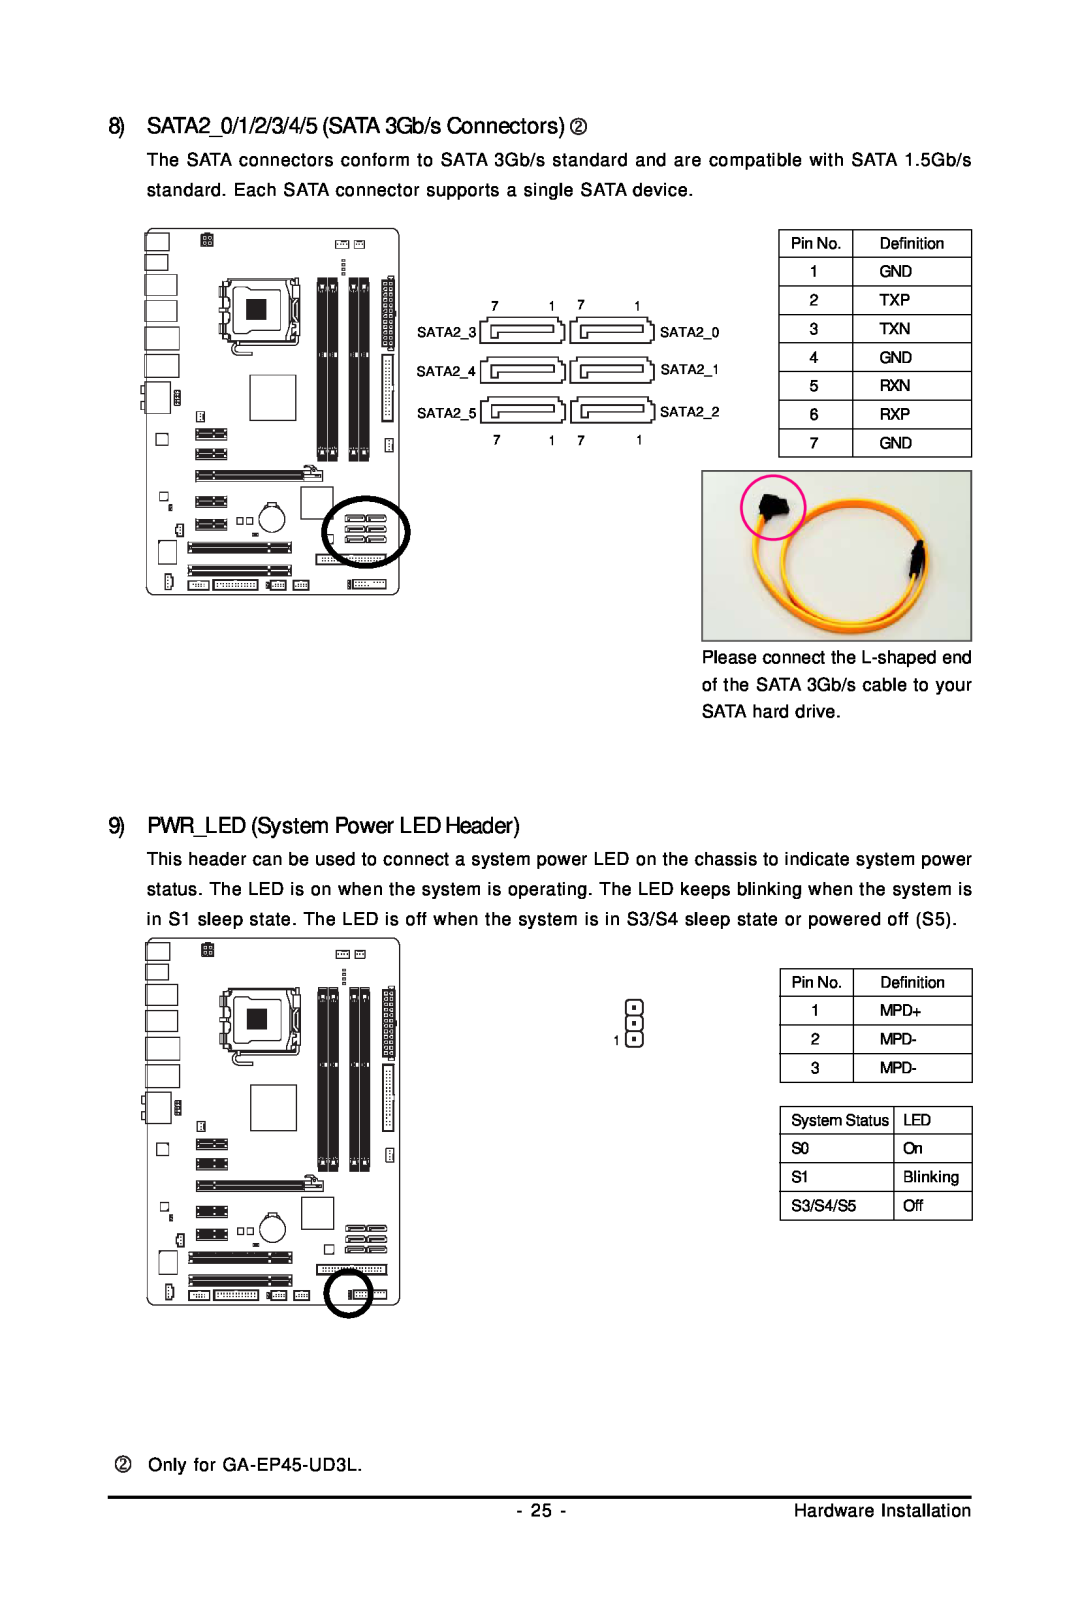 Gigabyte GA-EP45-UD3LR PWRLED System Power LED Header, SATA20/1/2/3/4/5 SATA 3Gb/s Connectors, Only for GA-EP45-UD3L 